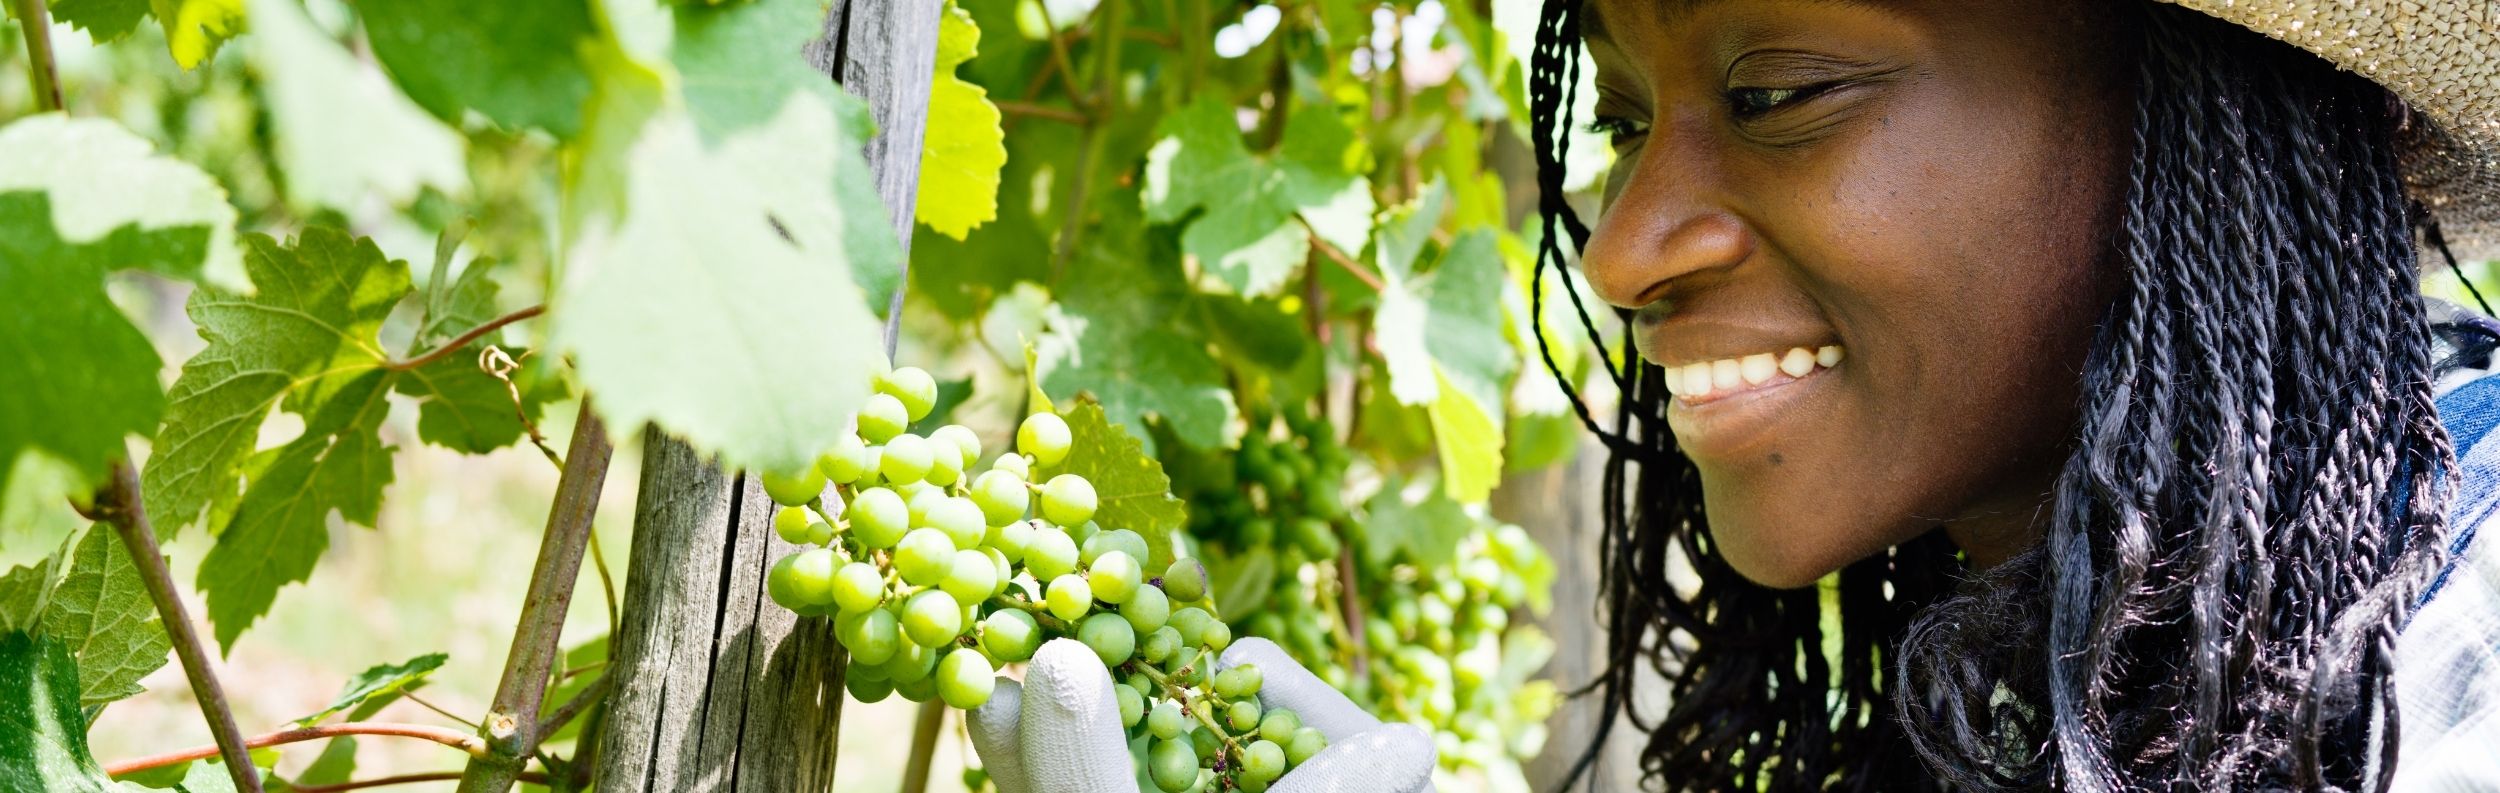  Woman looking at grapes in a vineyard.  